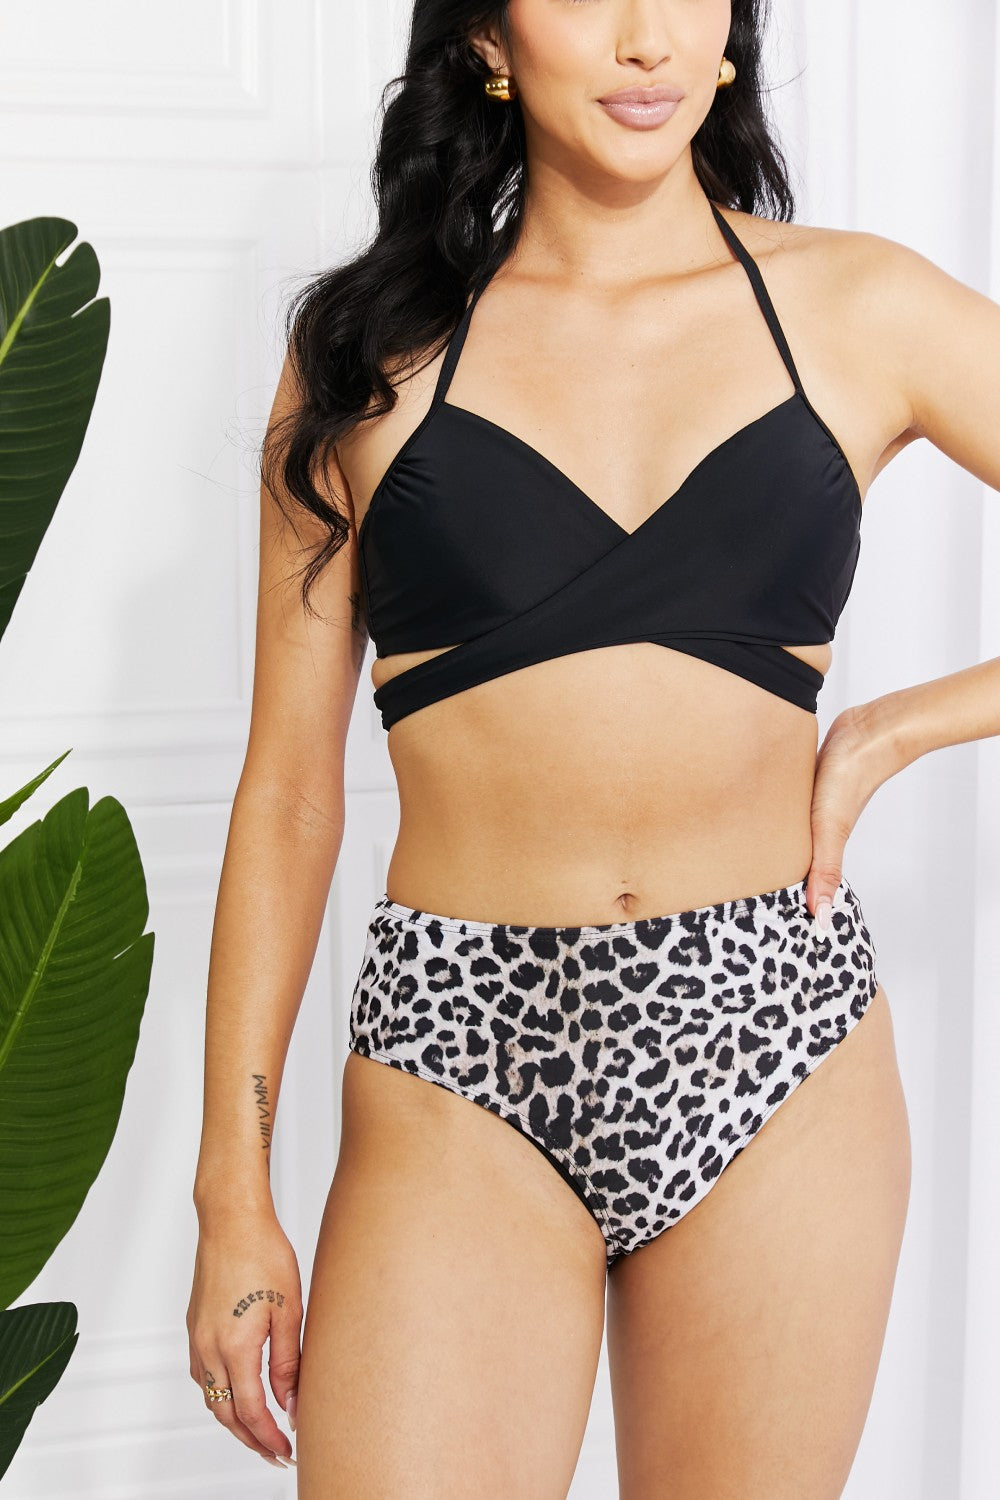 Marina West Swim Summer Splash Halter Bikini Set in Black - Sun of the Beach Boutique